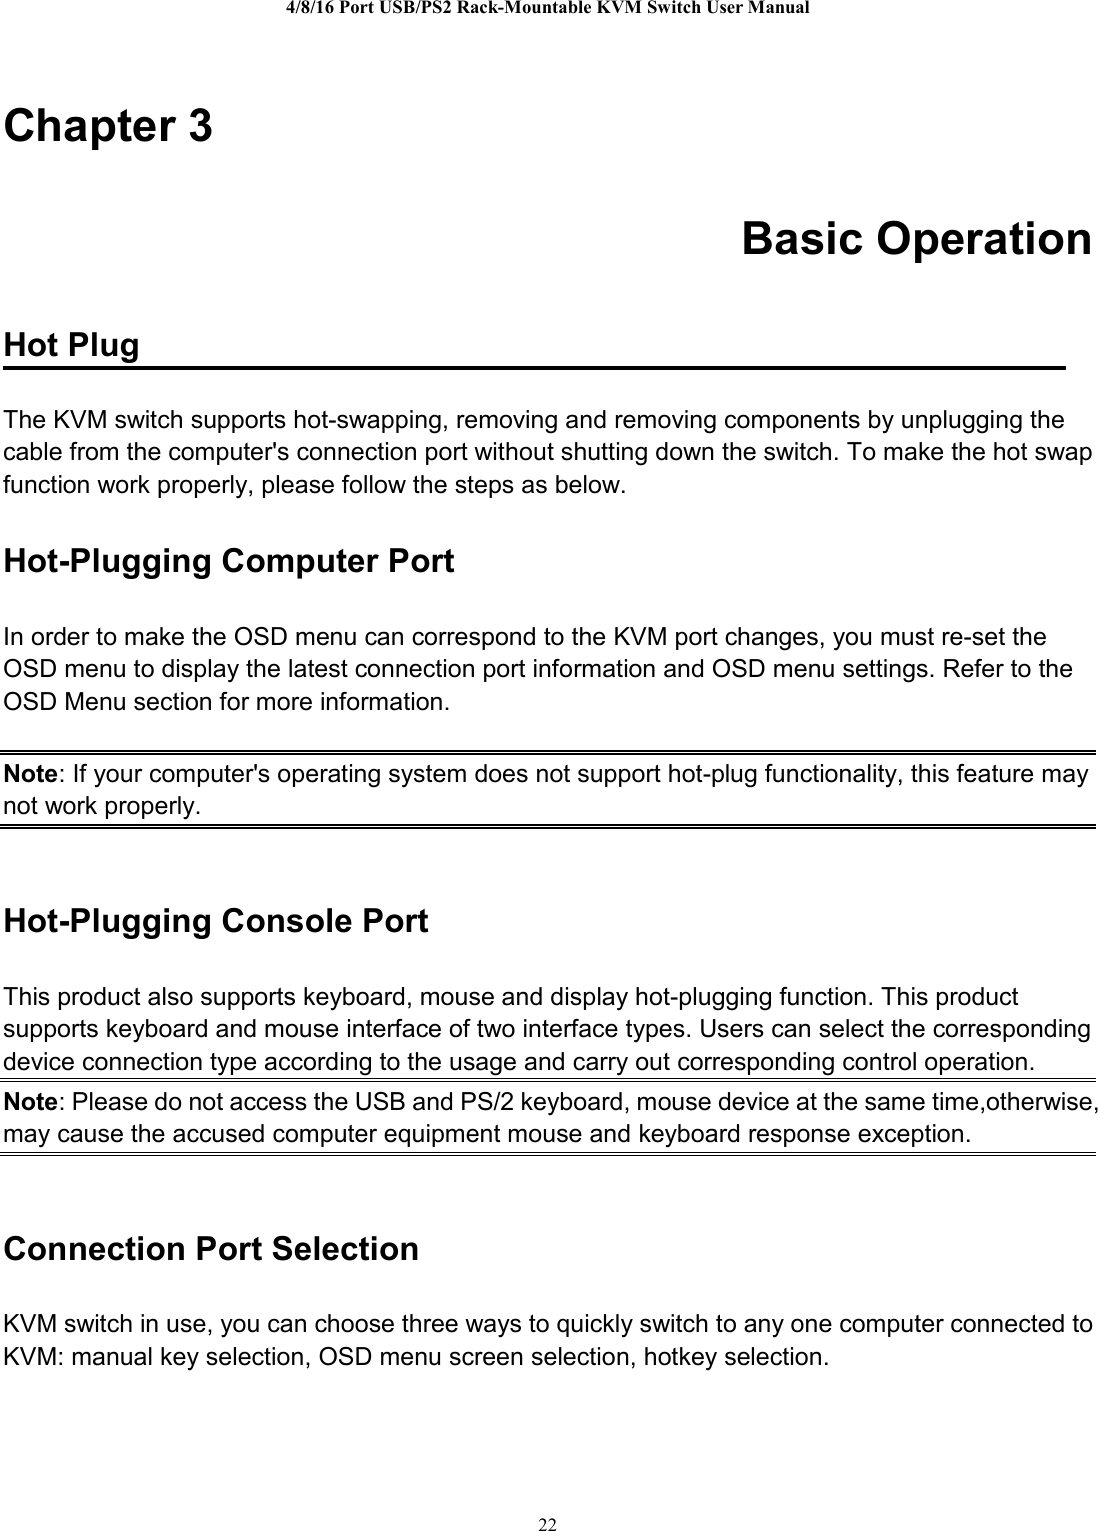 4/8/16 Port USB/PS2 RackMountable KVM Switch User Manual 22  Chapter 3 Basic Operation Hot Plug 3C/;-..HotPlugging Computer Port !.&apos;493C/;&apos;49&apos;49&quot;&apos;49/Note)!-;.HotPlugging Console Port .;.1Note)&amp;14&amp;4$,..#Connection Port Selection 3C/.3C/).&apos;49.